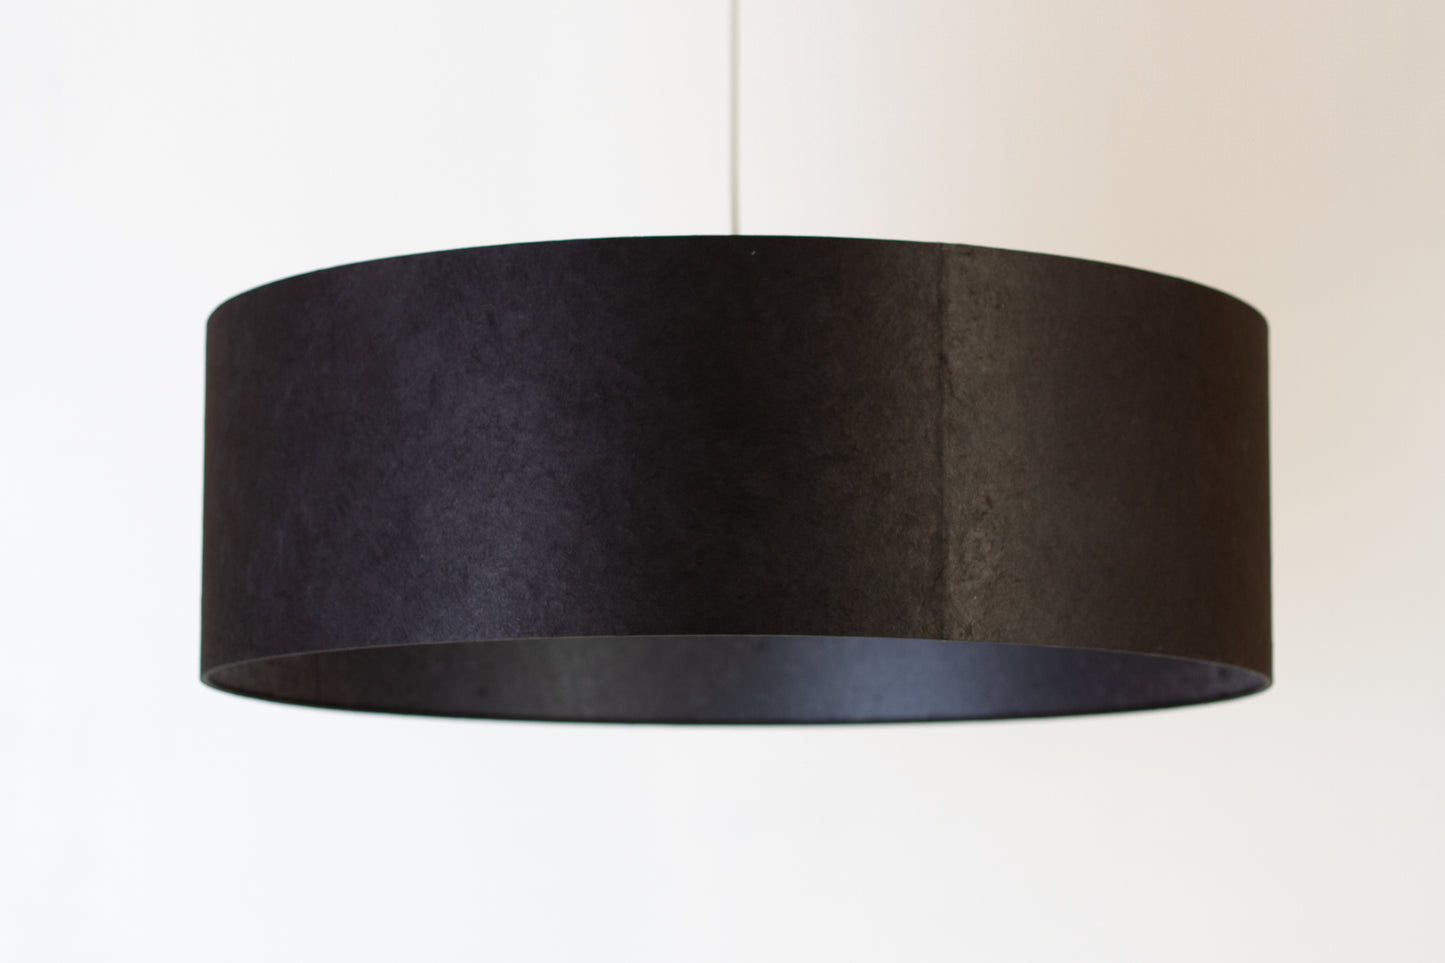 Drum Lamp Shade - P55 - Black Lokta, 60cm(d) x 20cm(h)